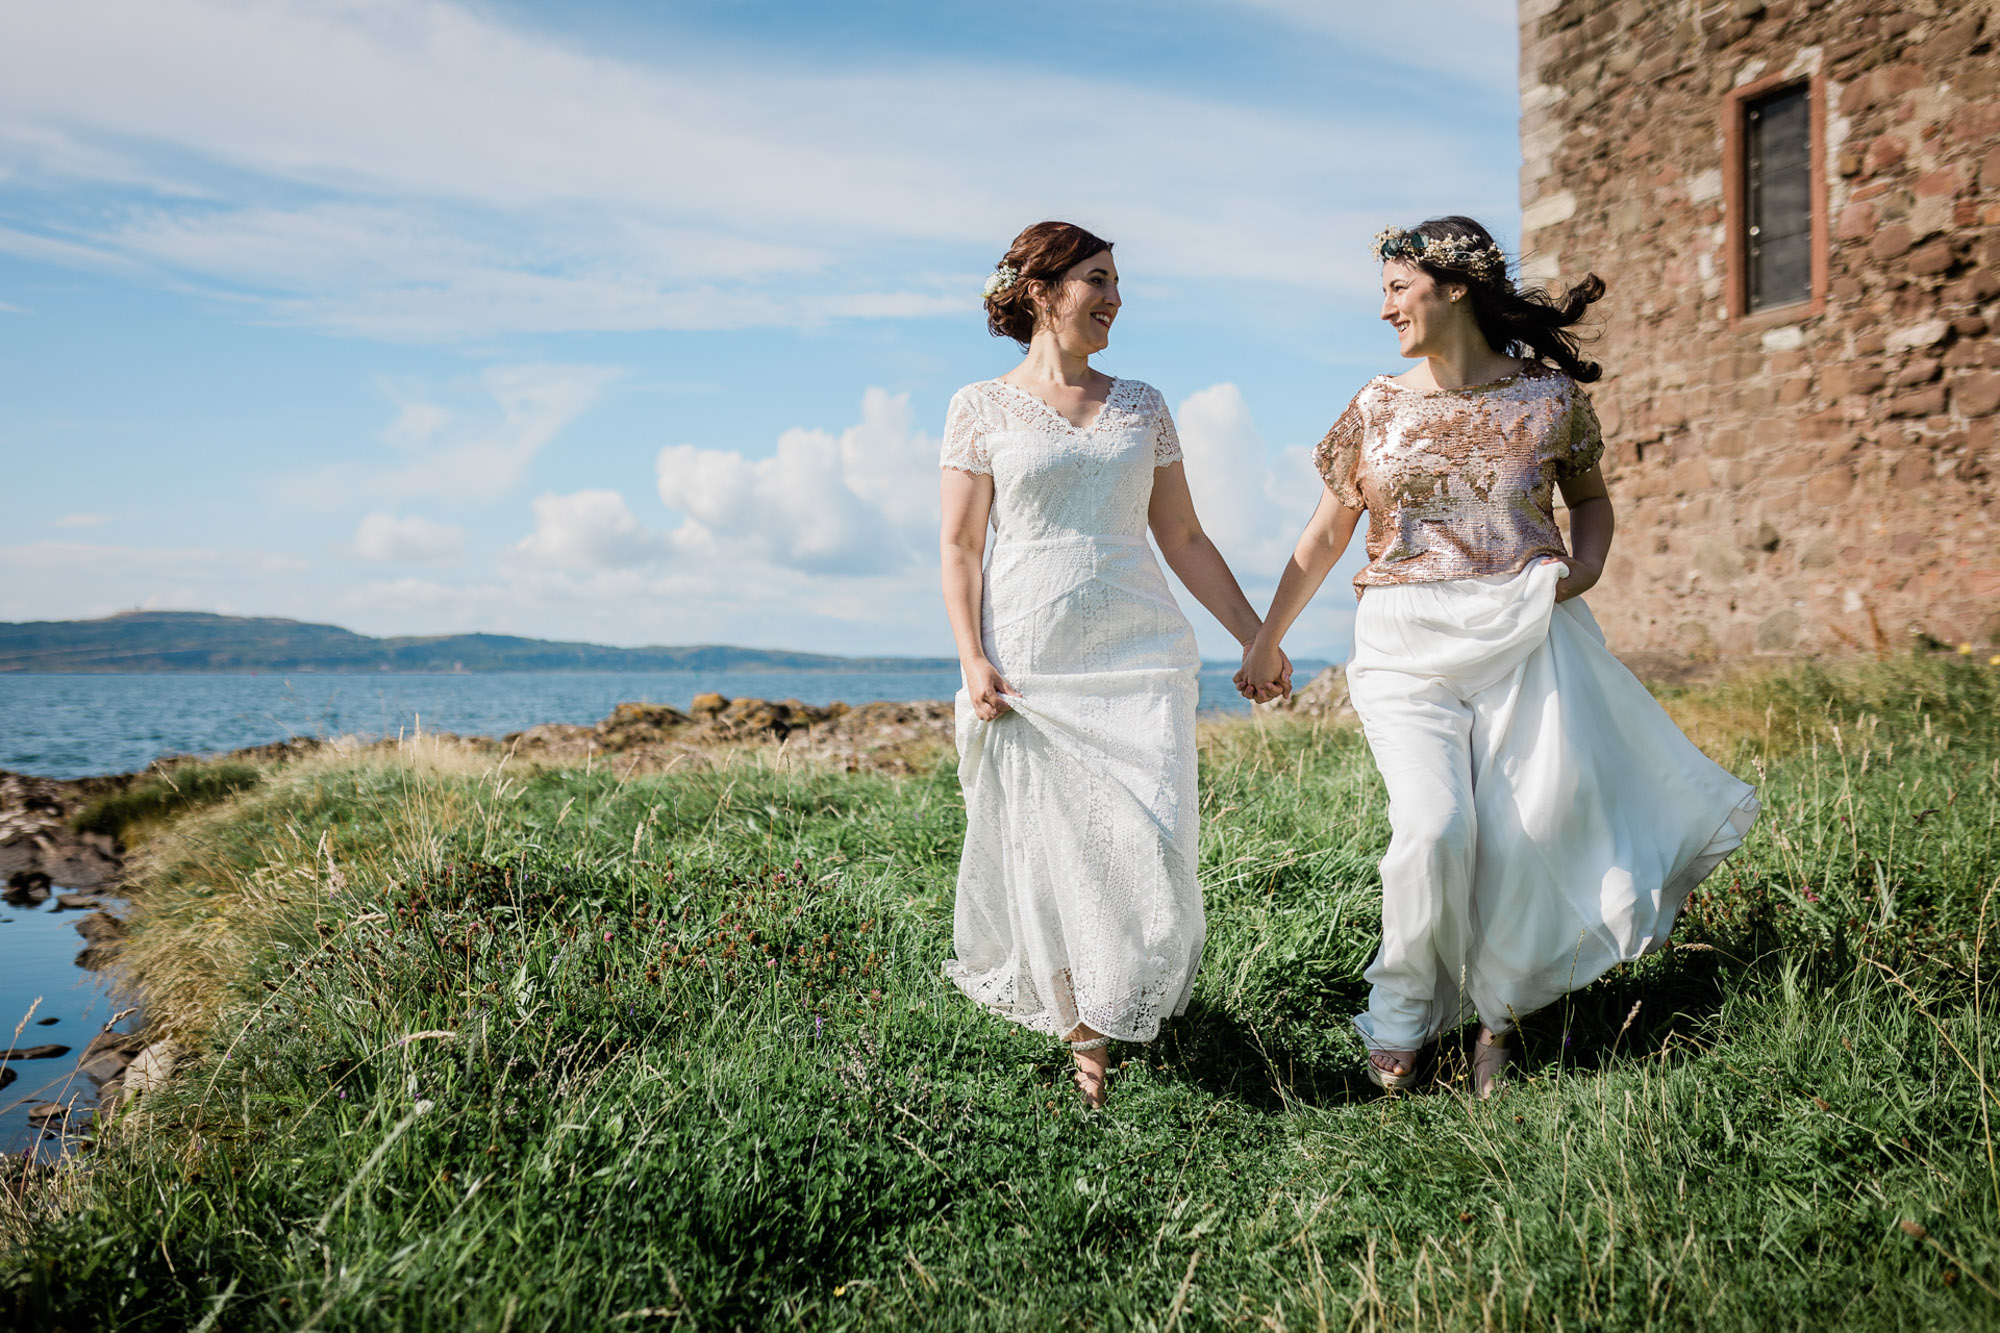 Struve Photography - Natural, fun Scottish wedding Photography